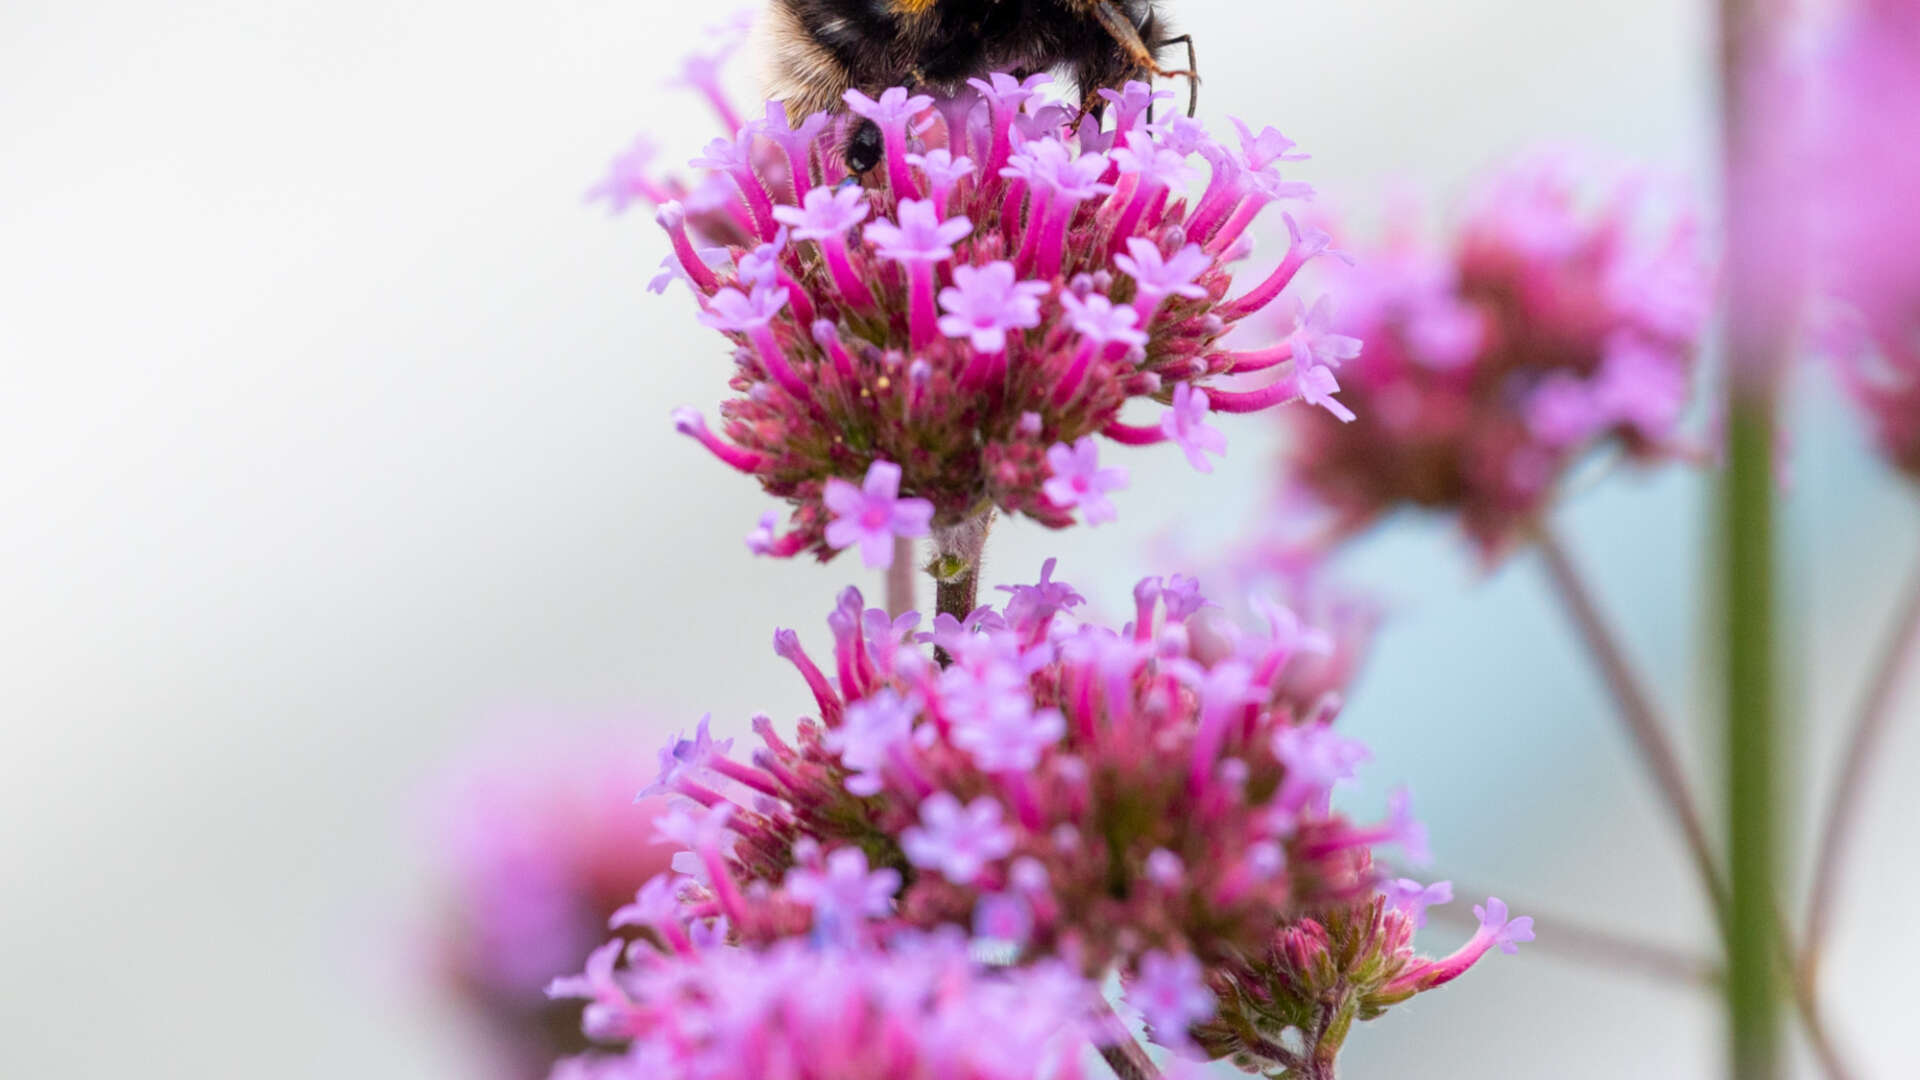 Bee sitting on top of a pink verbena flower